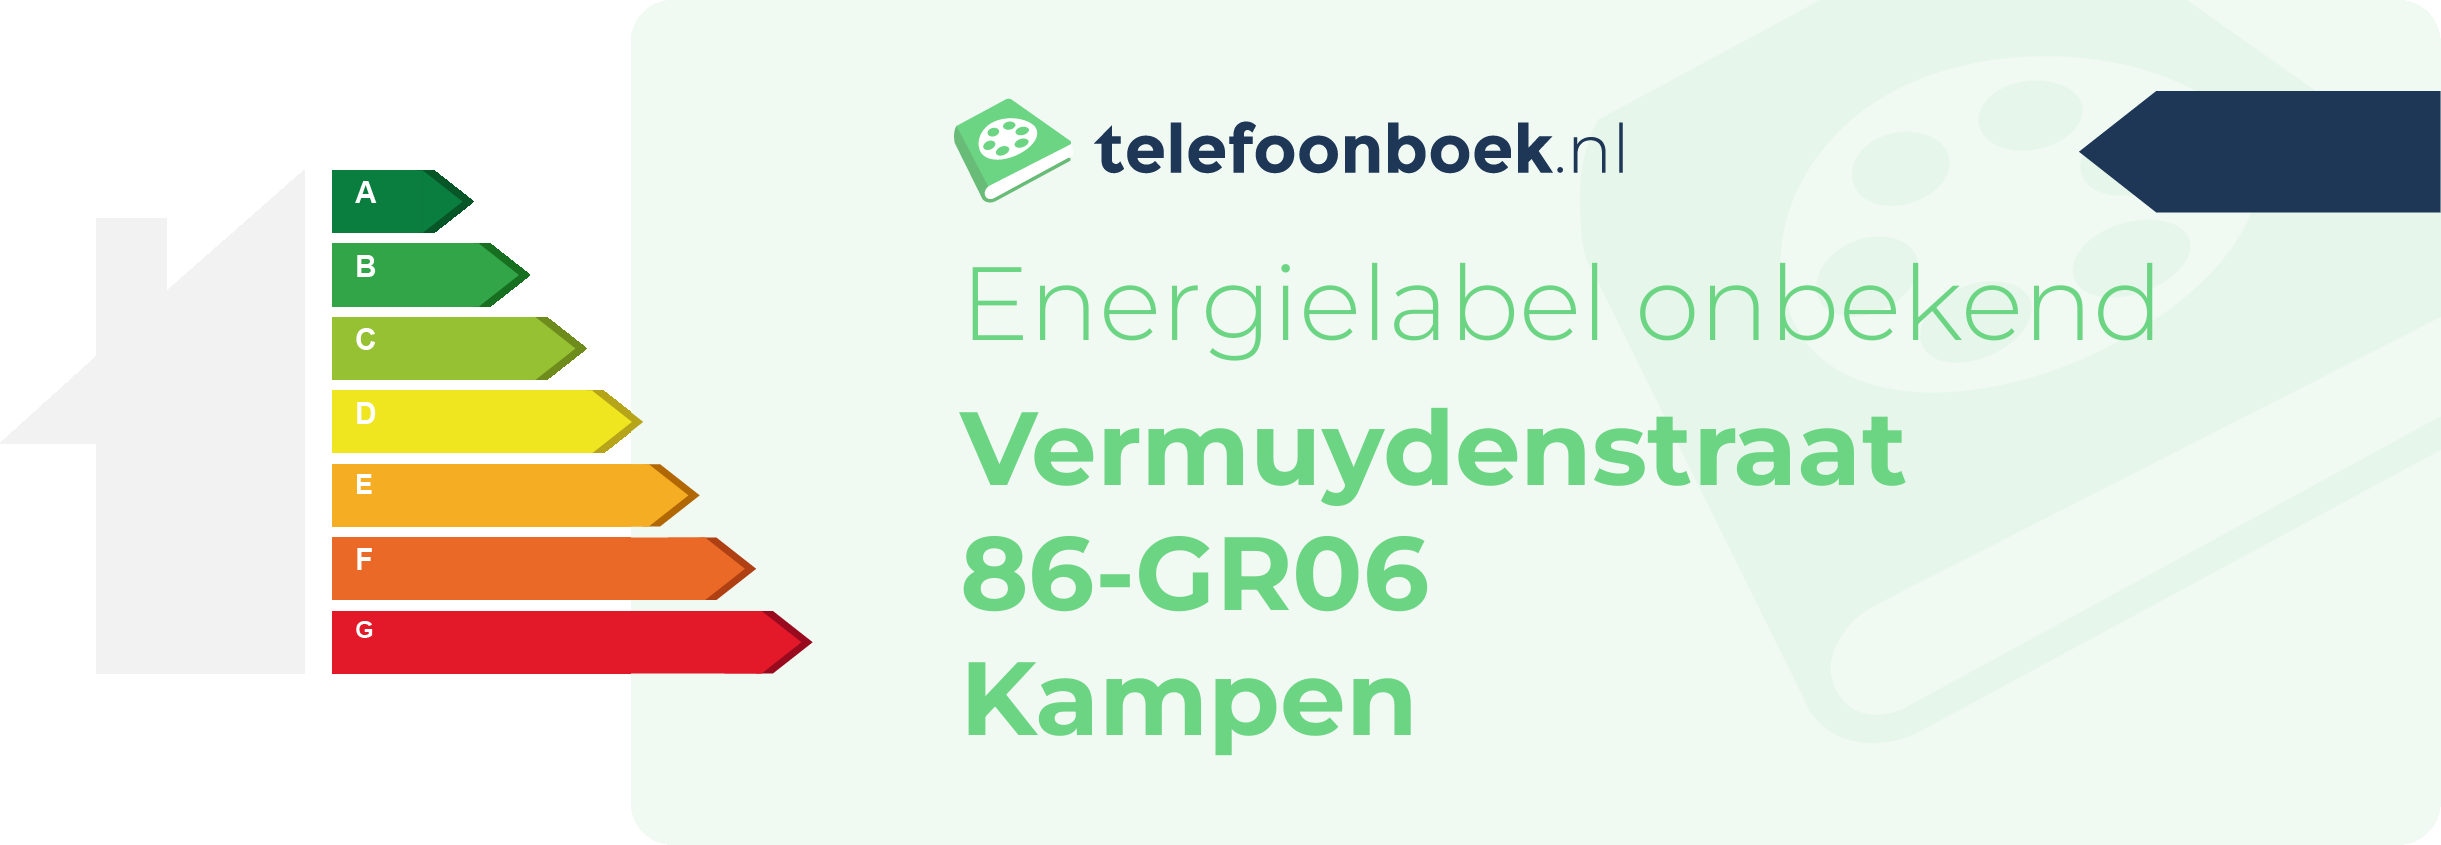 Energielabel Vermuydenstraat 86-GR06 Kampen